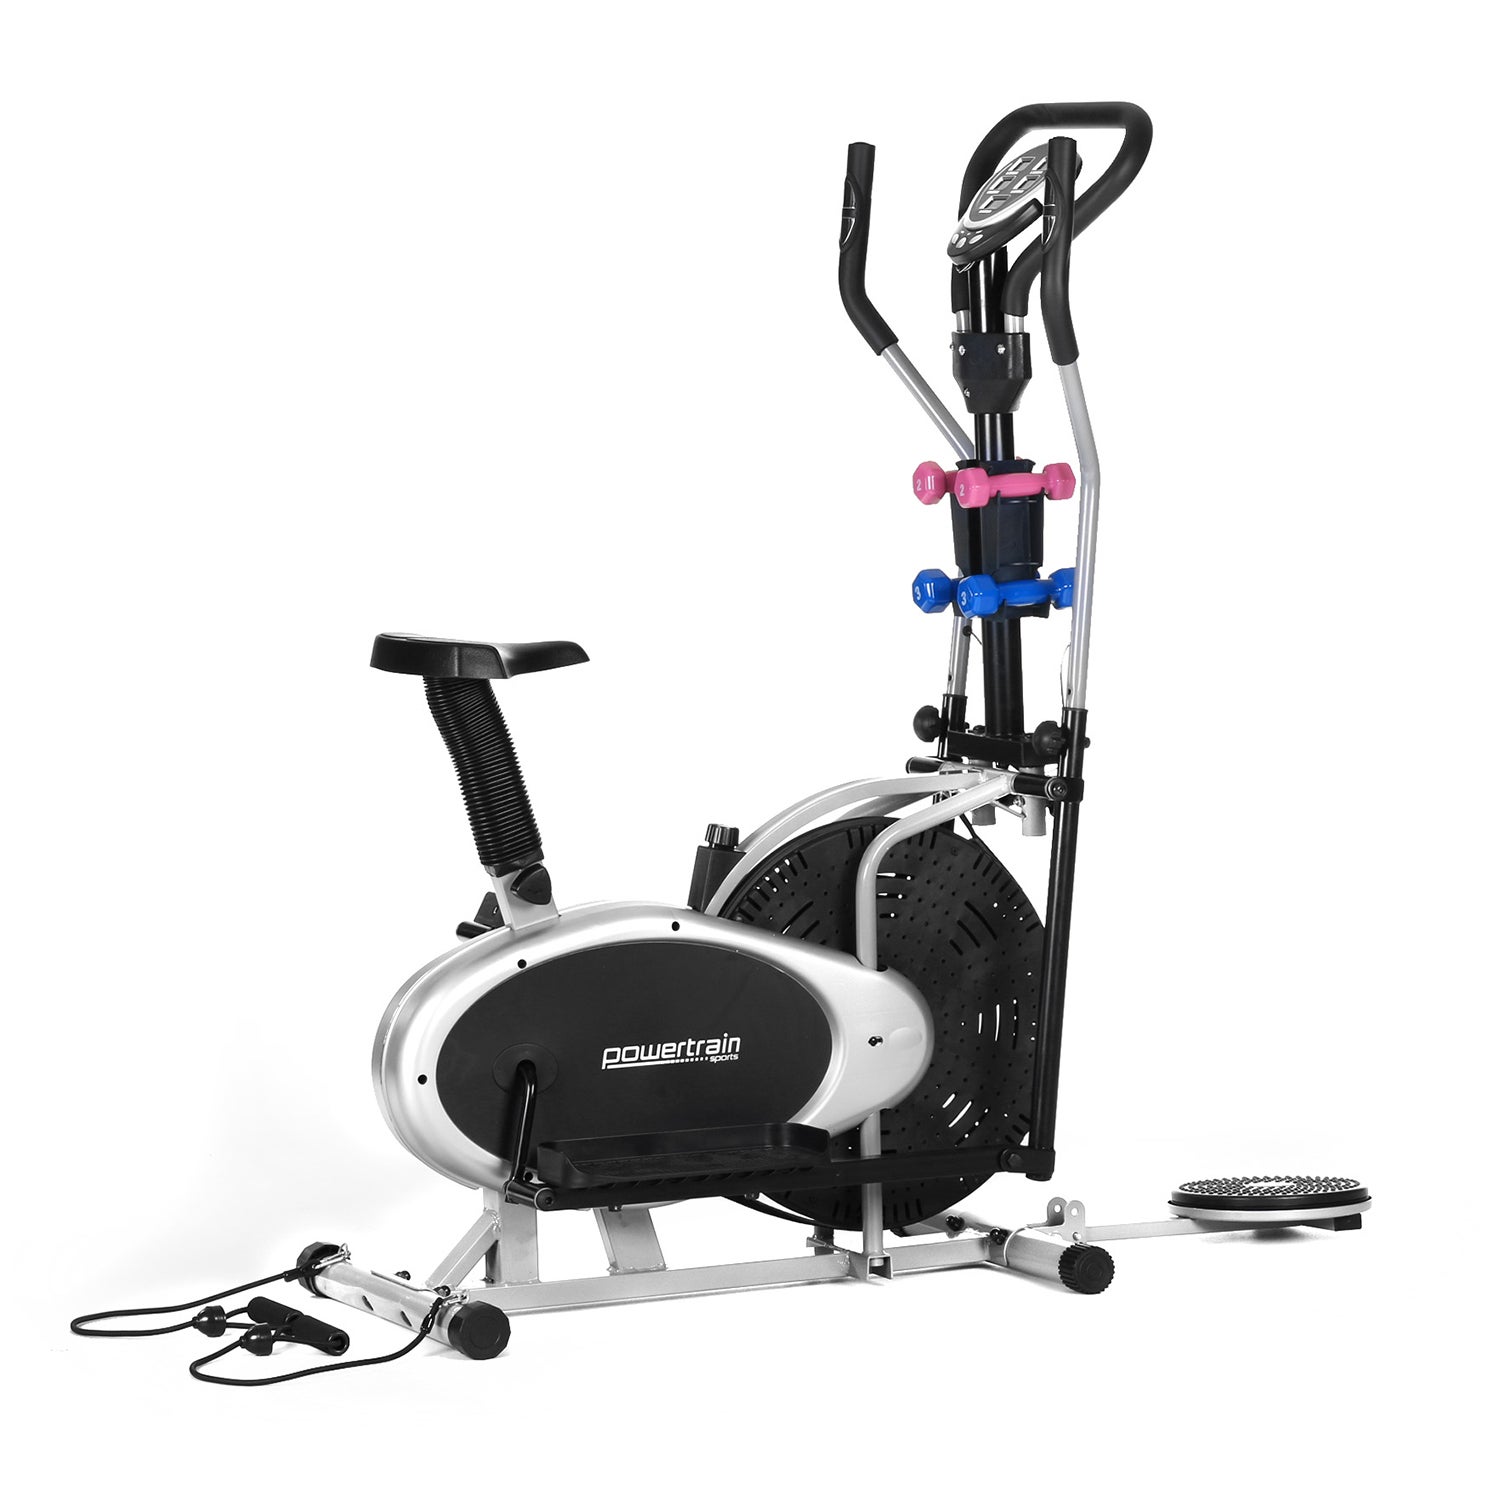 Powertrain Elliptical Cross Trainer Exercise Home Gym Stepper Equipment Bike